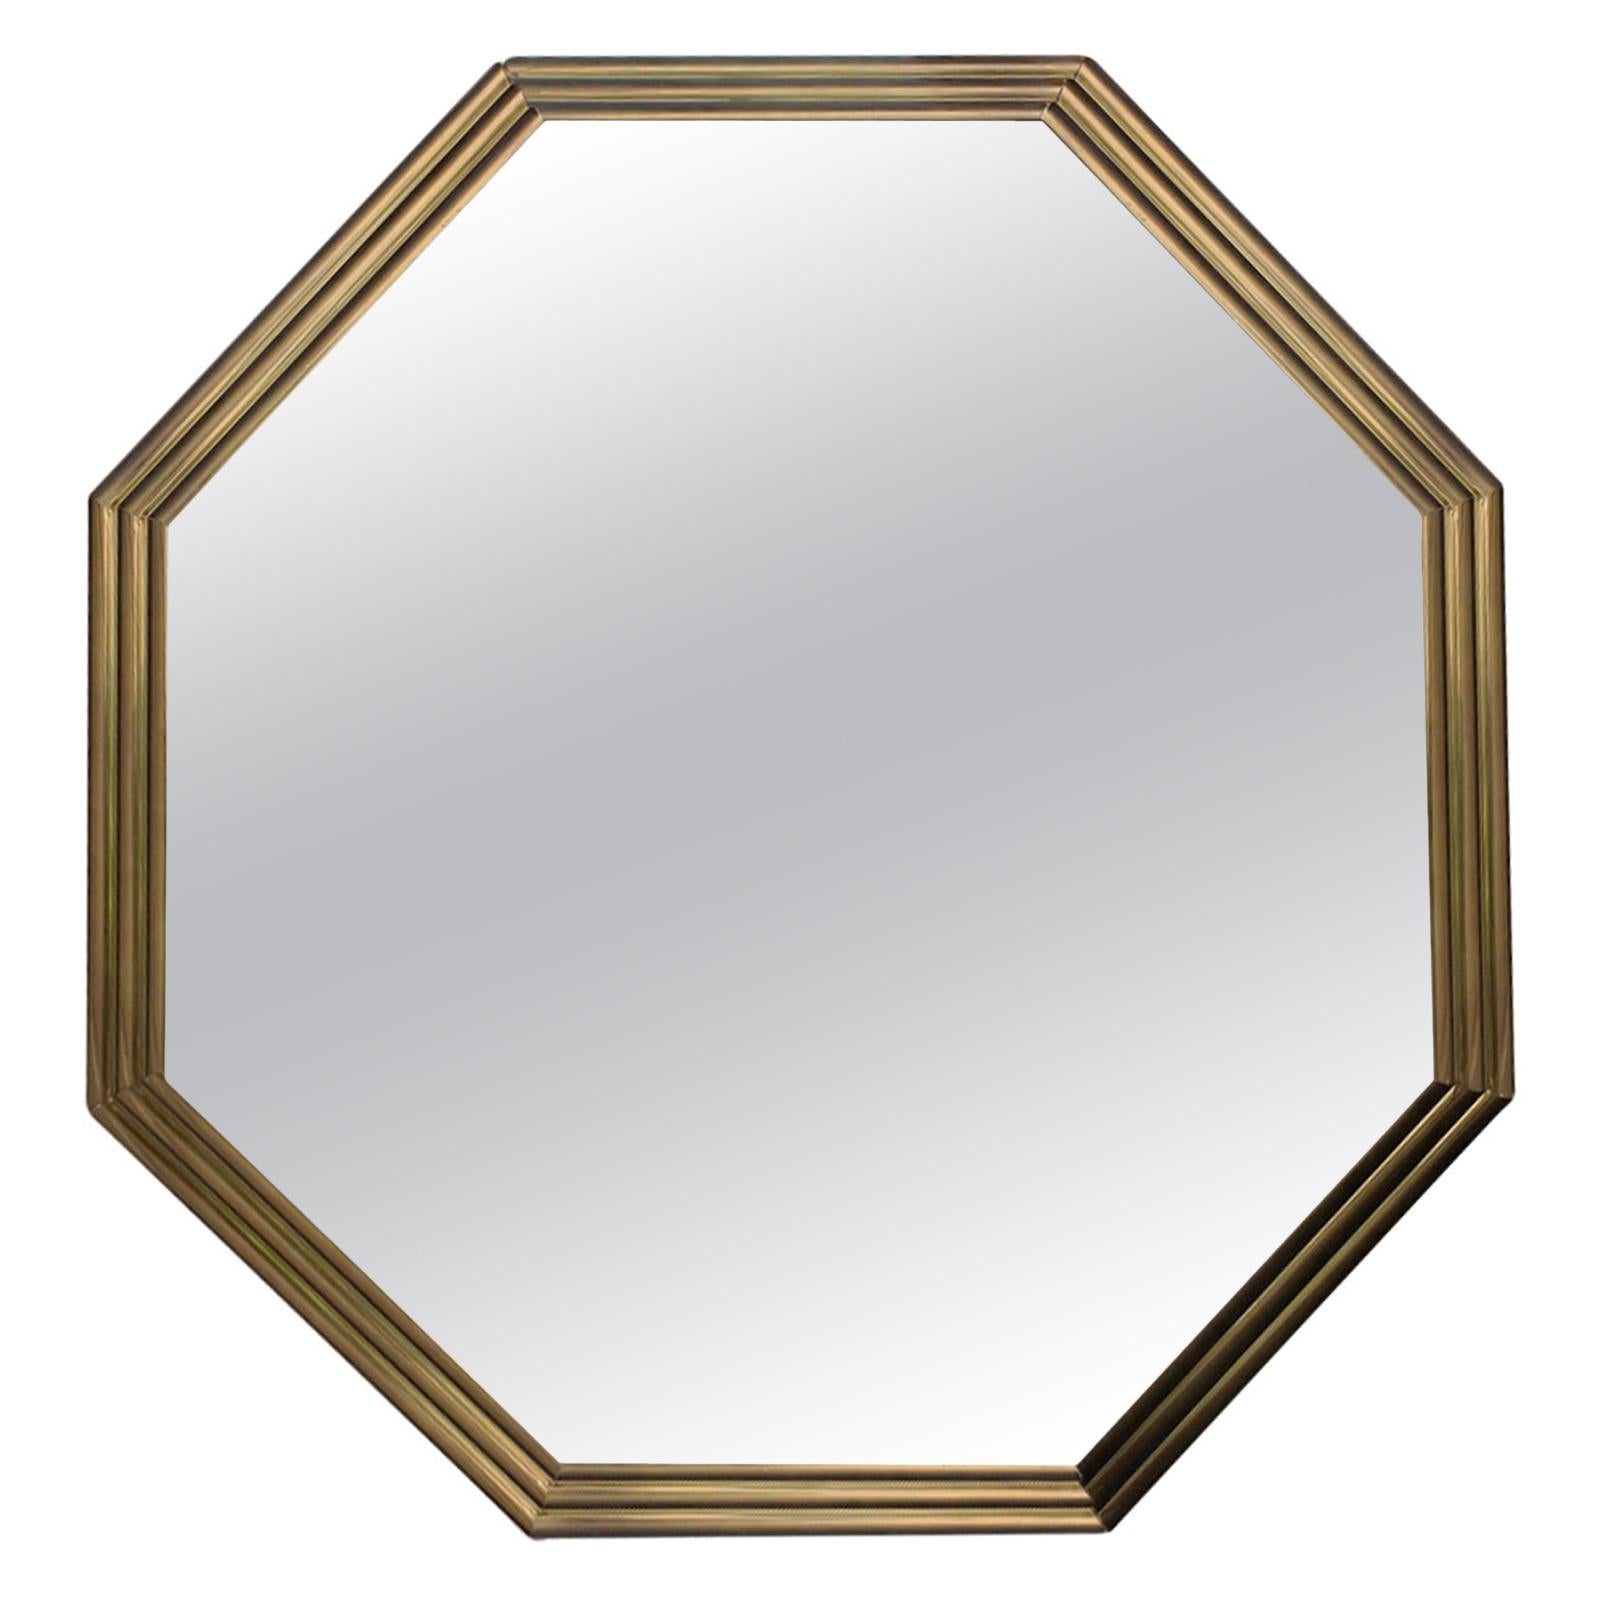 Mid-20th Century Octagonal Brass Mirror, circa 1970s-1980s